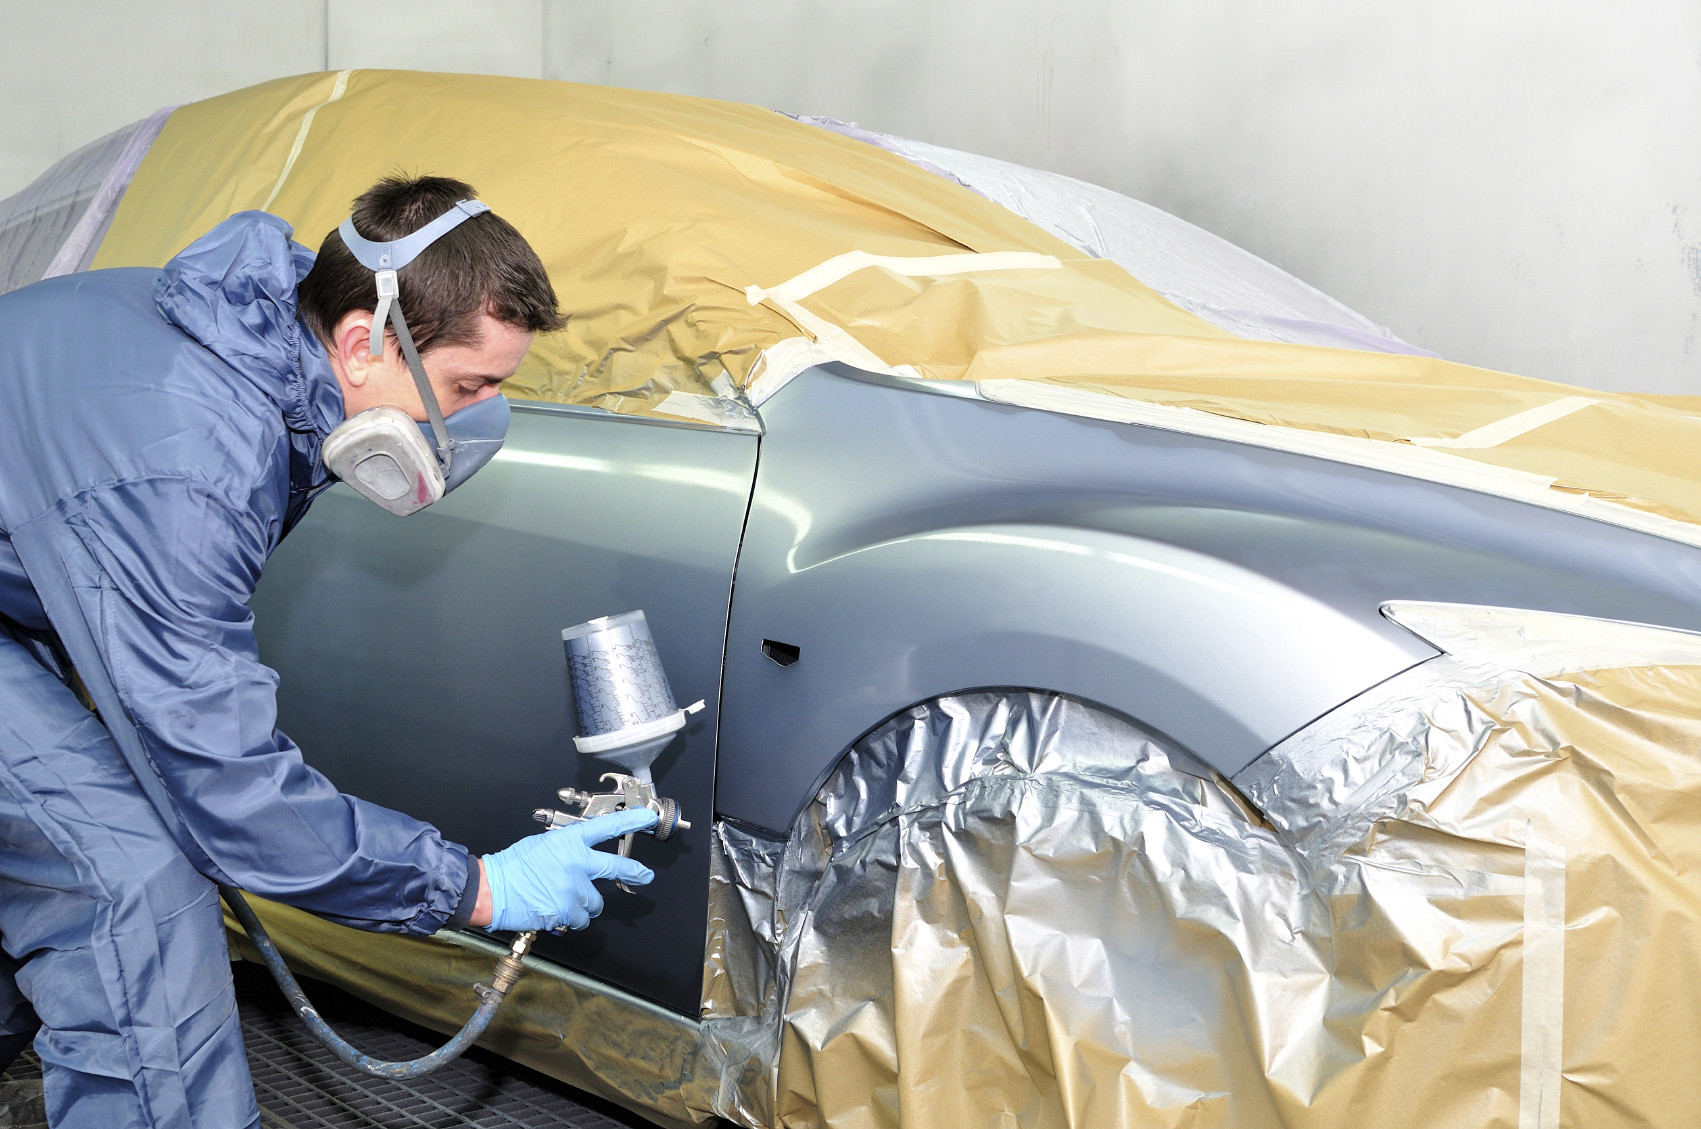 Best ideas about DIY Paint Job
. Save or Pin Car Paint Job Tempe Arizona – DIY Auto Paint Tips Now.